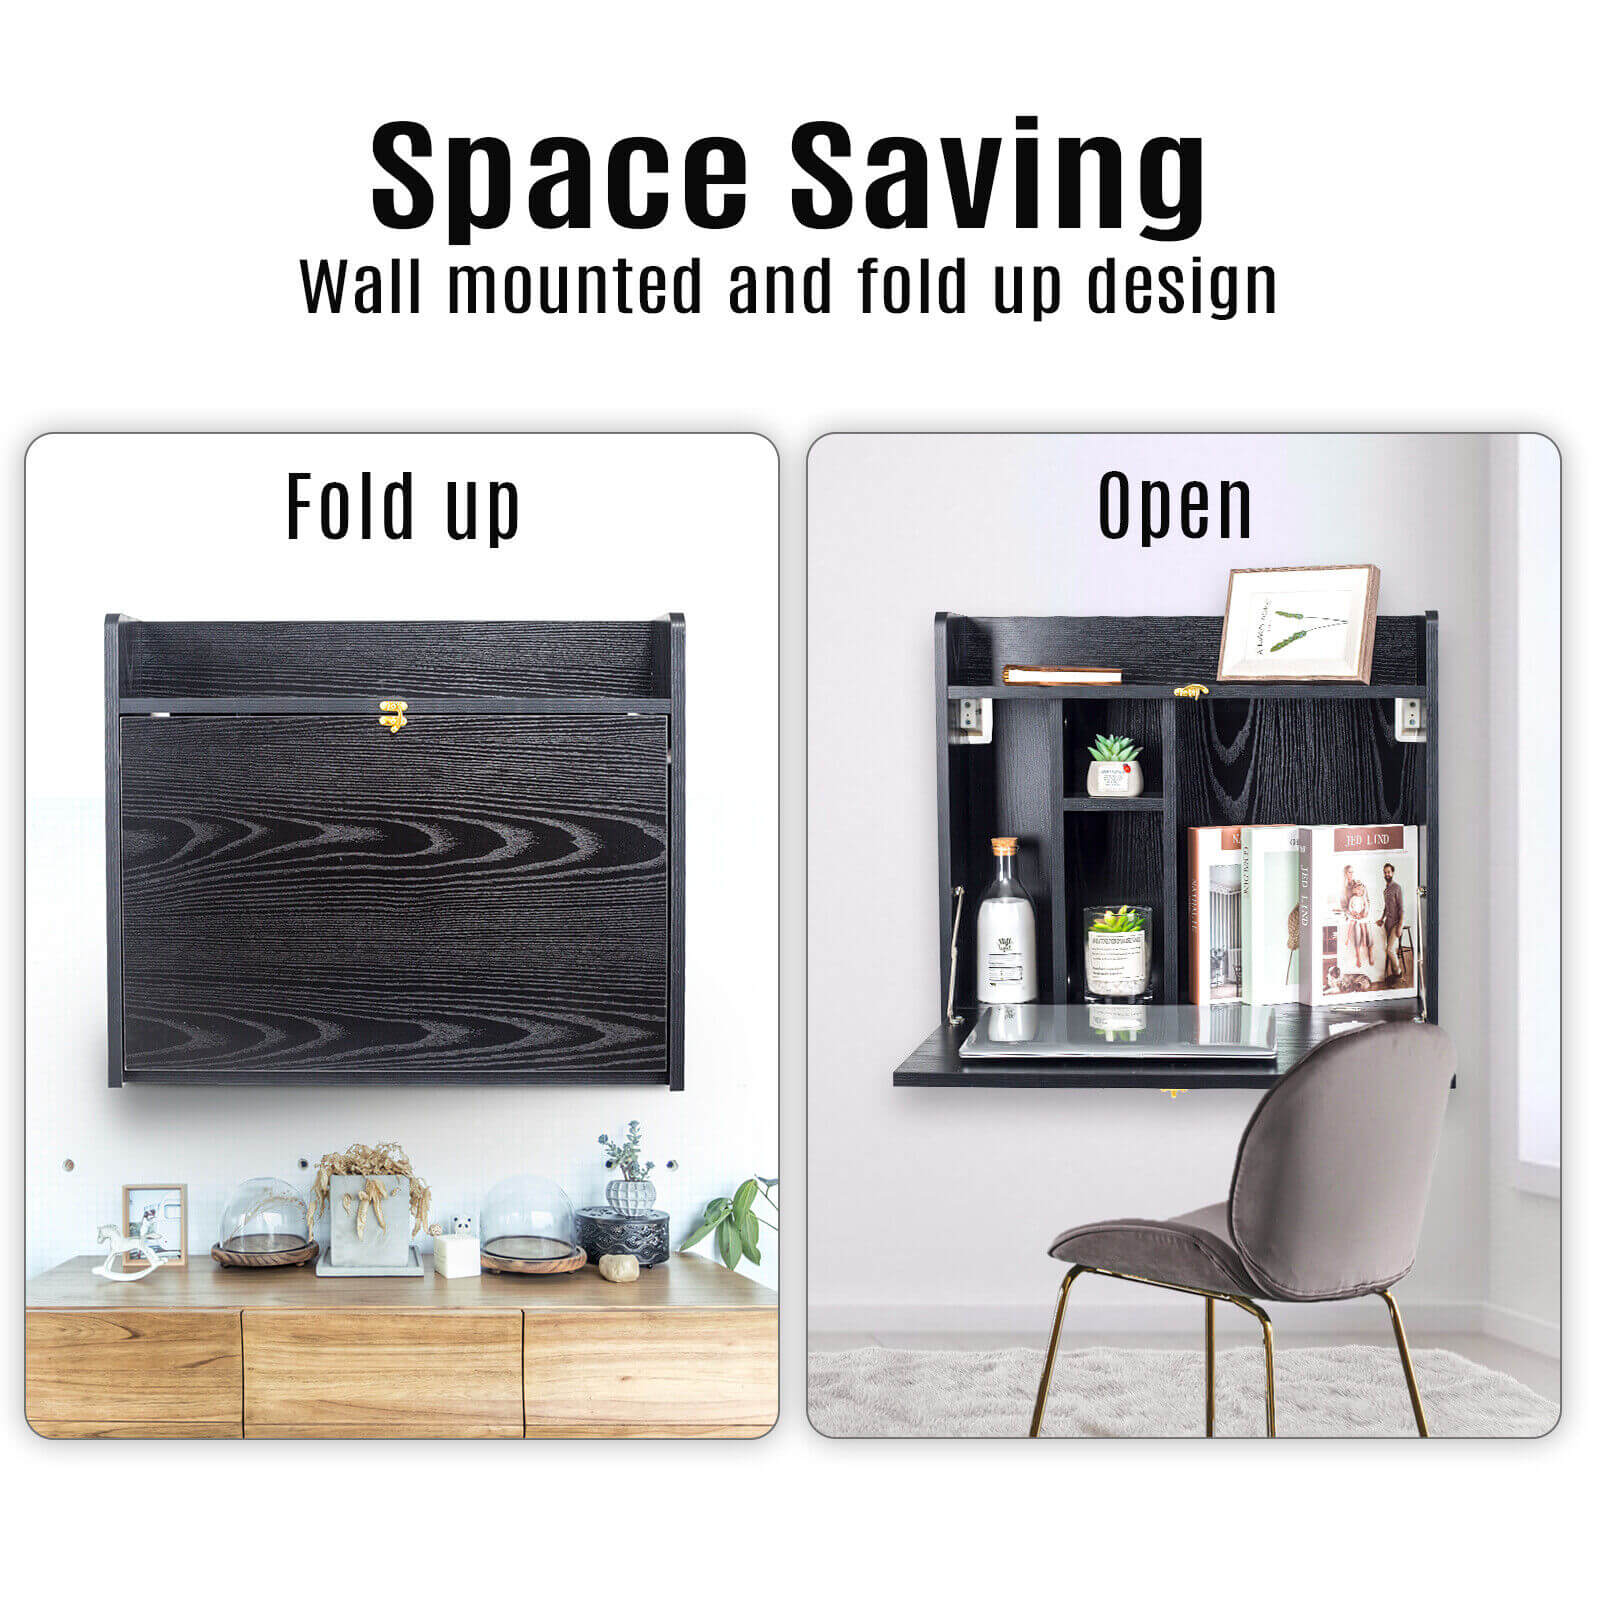 Elecwish Black Wall Mounted Table Foldable Storage Shelf Wall-Mounted Desk HW1138 has wall mounted and fold up design